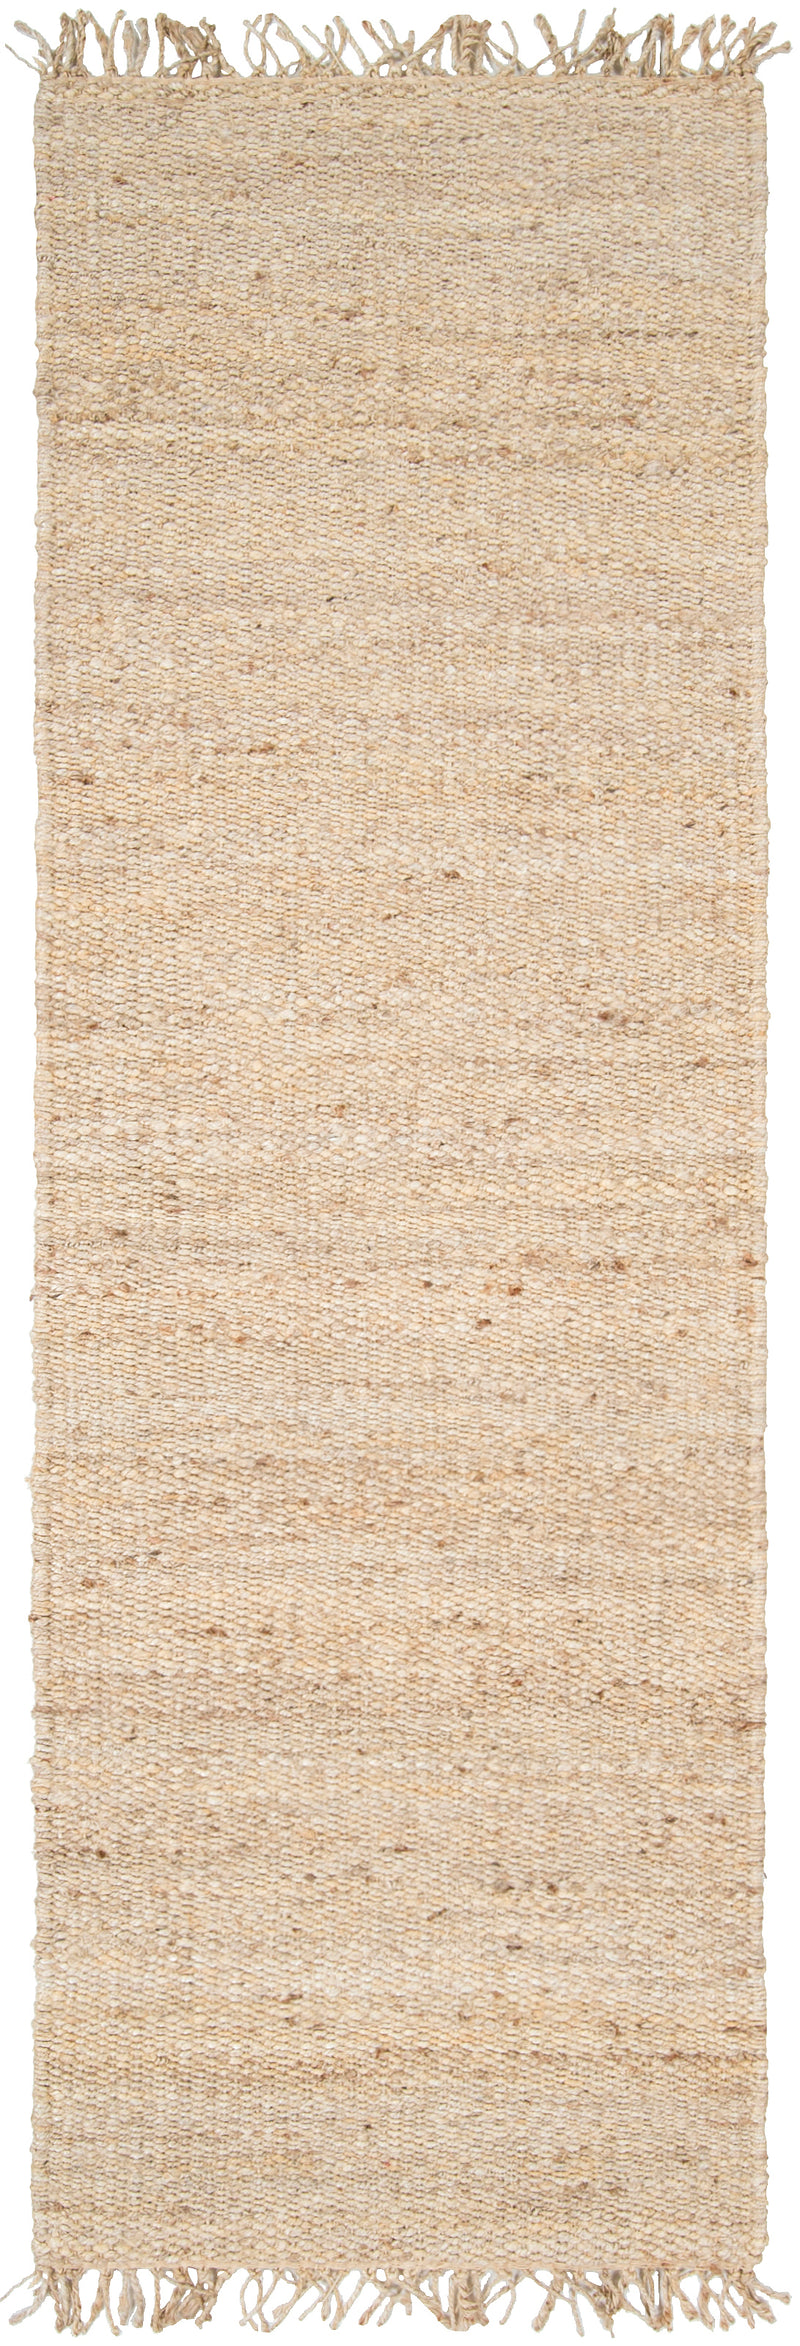 media image for jute rug design by surya 2 225